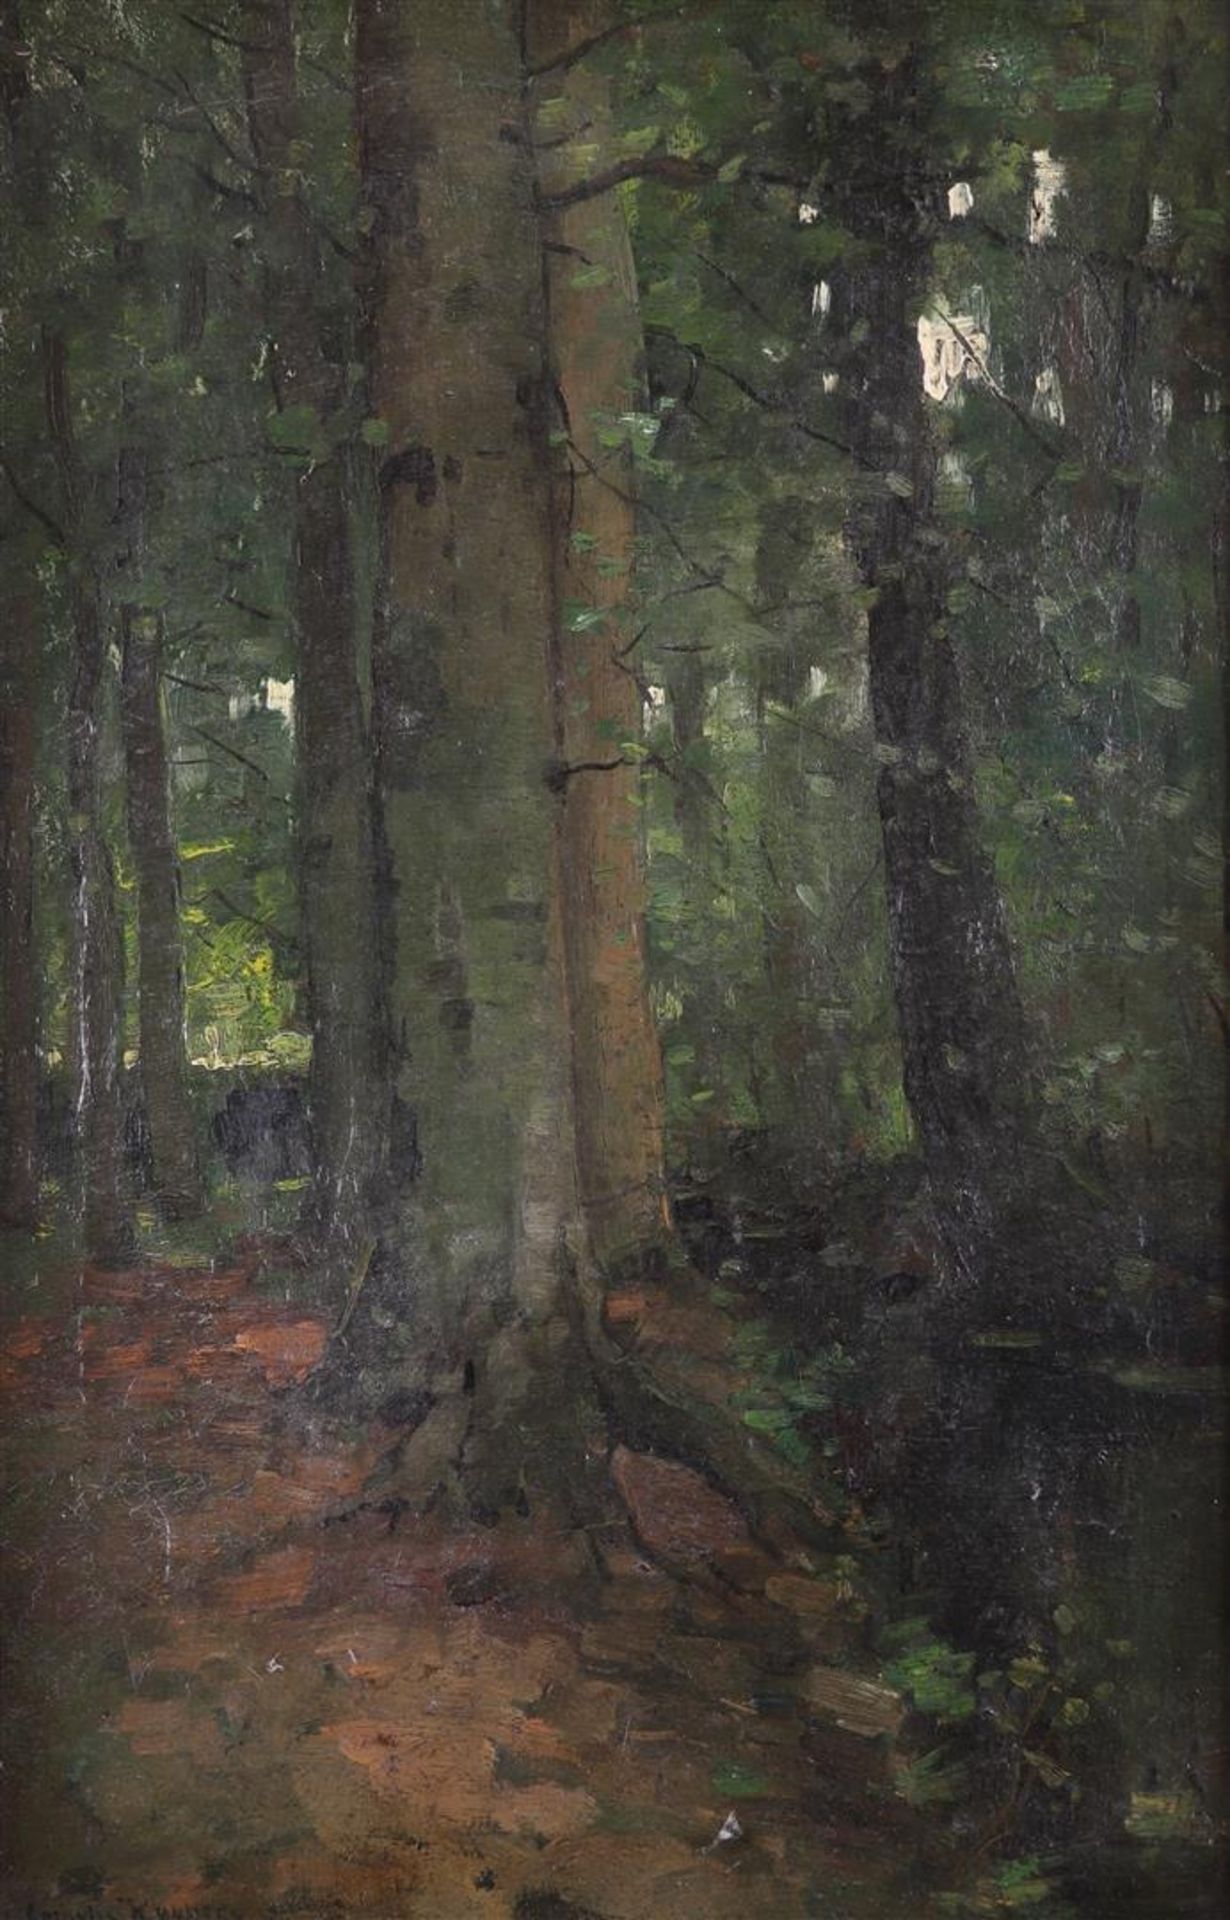 "Cornelis" Marinus Kuypers (Rijswijk 1896 - 1981 The Hague), Beech trees along a forest stream, 